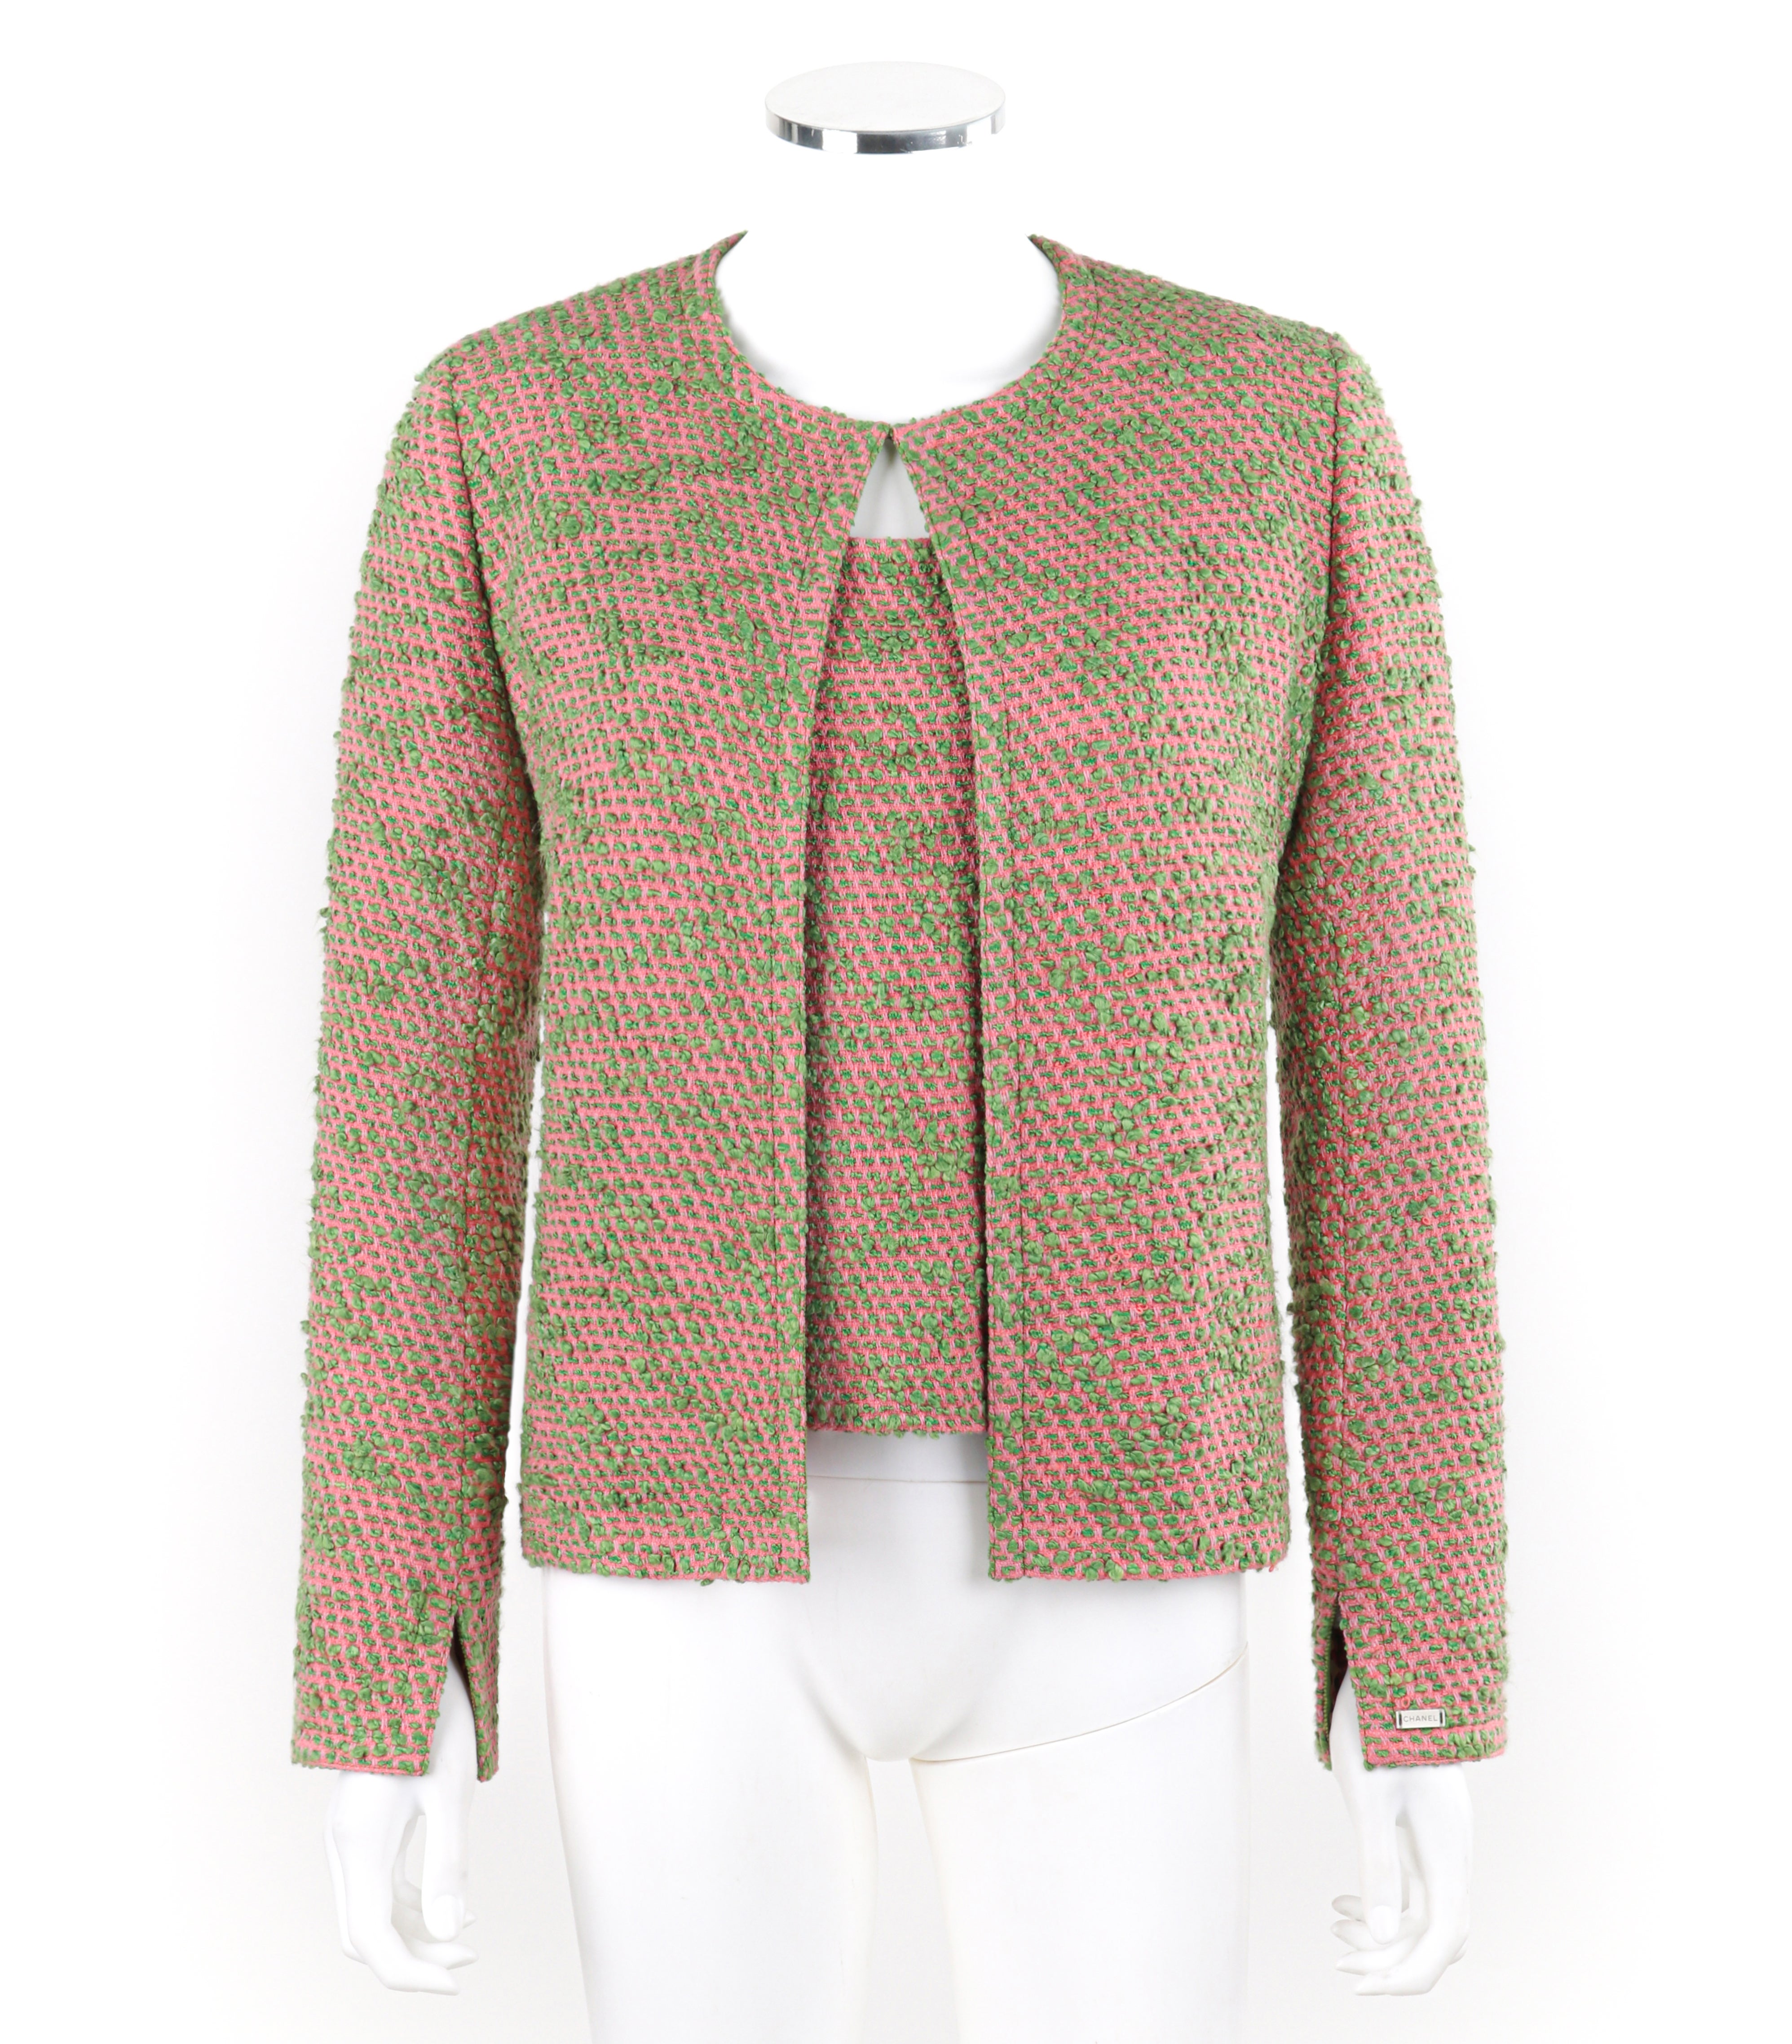 CHANEL c.2000s Pink Green Boucle Knit Silk Jacket & Tank Top Shell 2pc Size 42 en vente